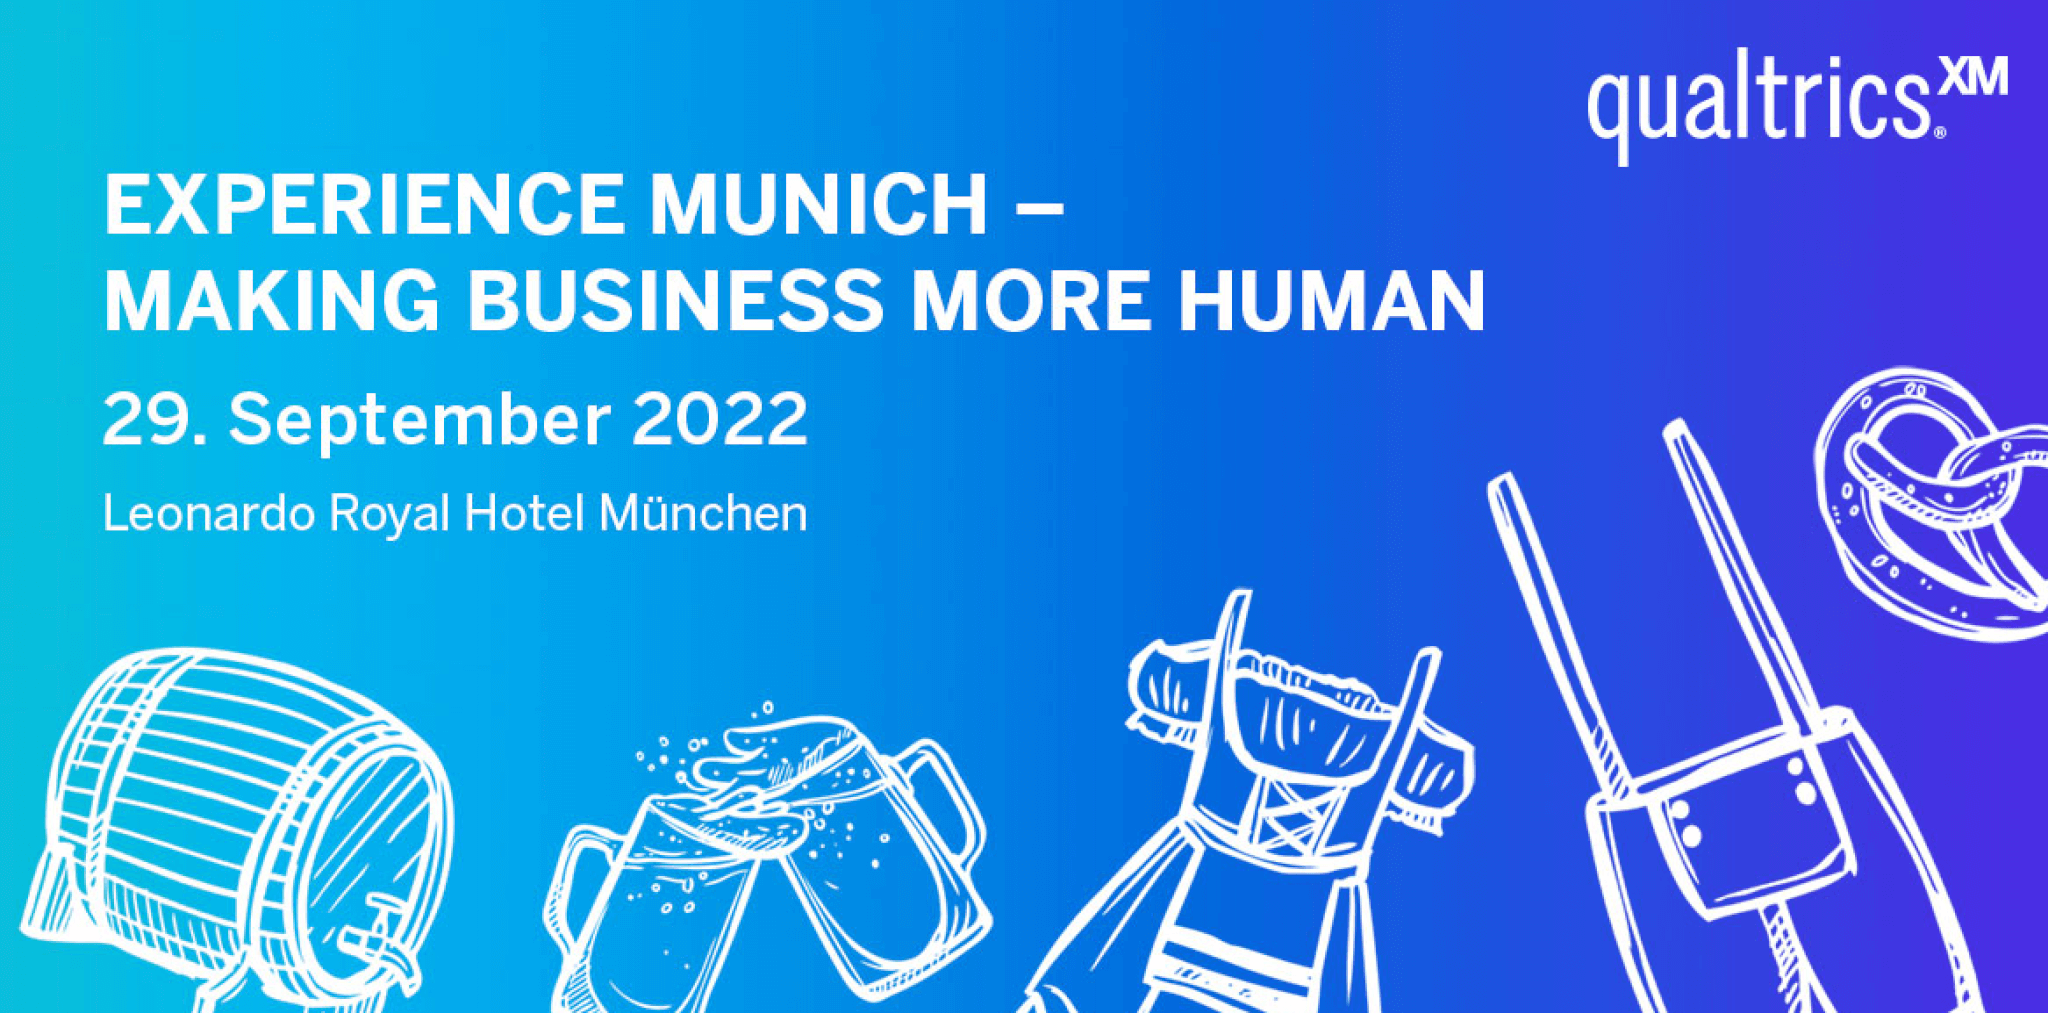 Experience Munich - Making Business More Human